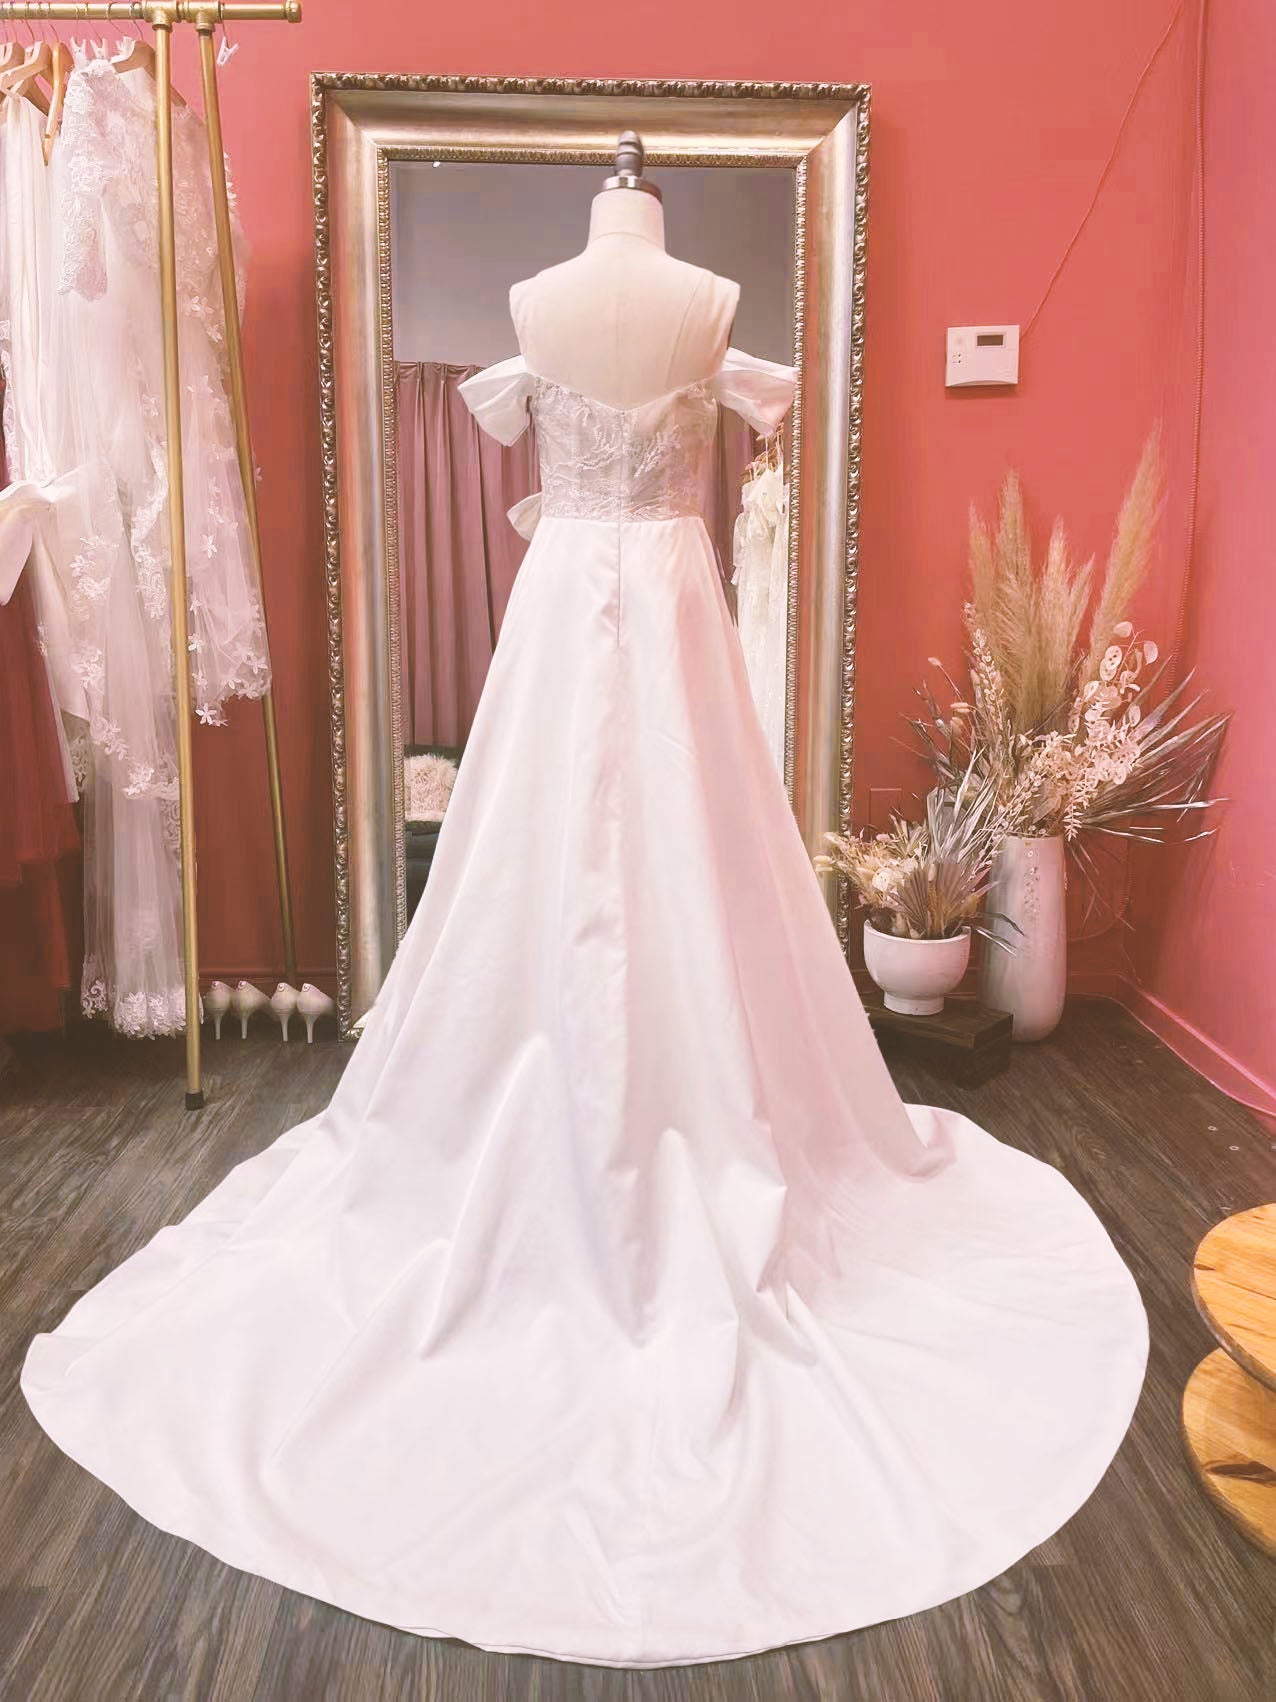 Jolie - Selena Huan Floral Abstract Chantilly Lace Waist Illusive Strapless  Skirt Ball gown